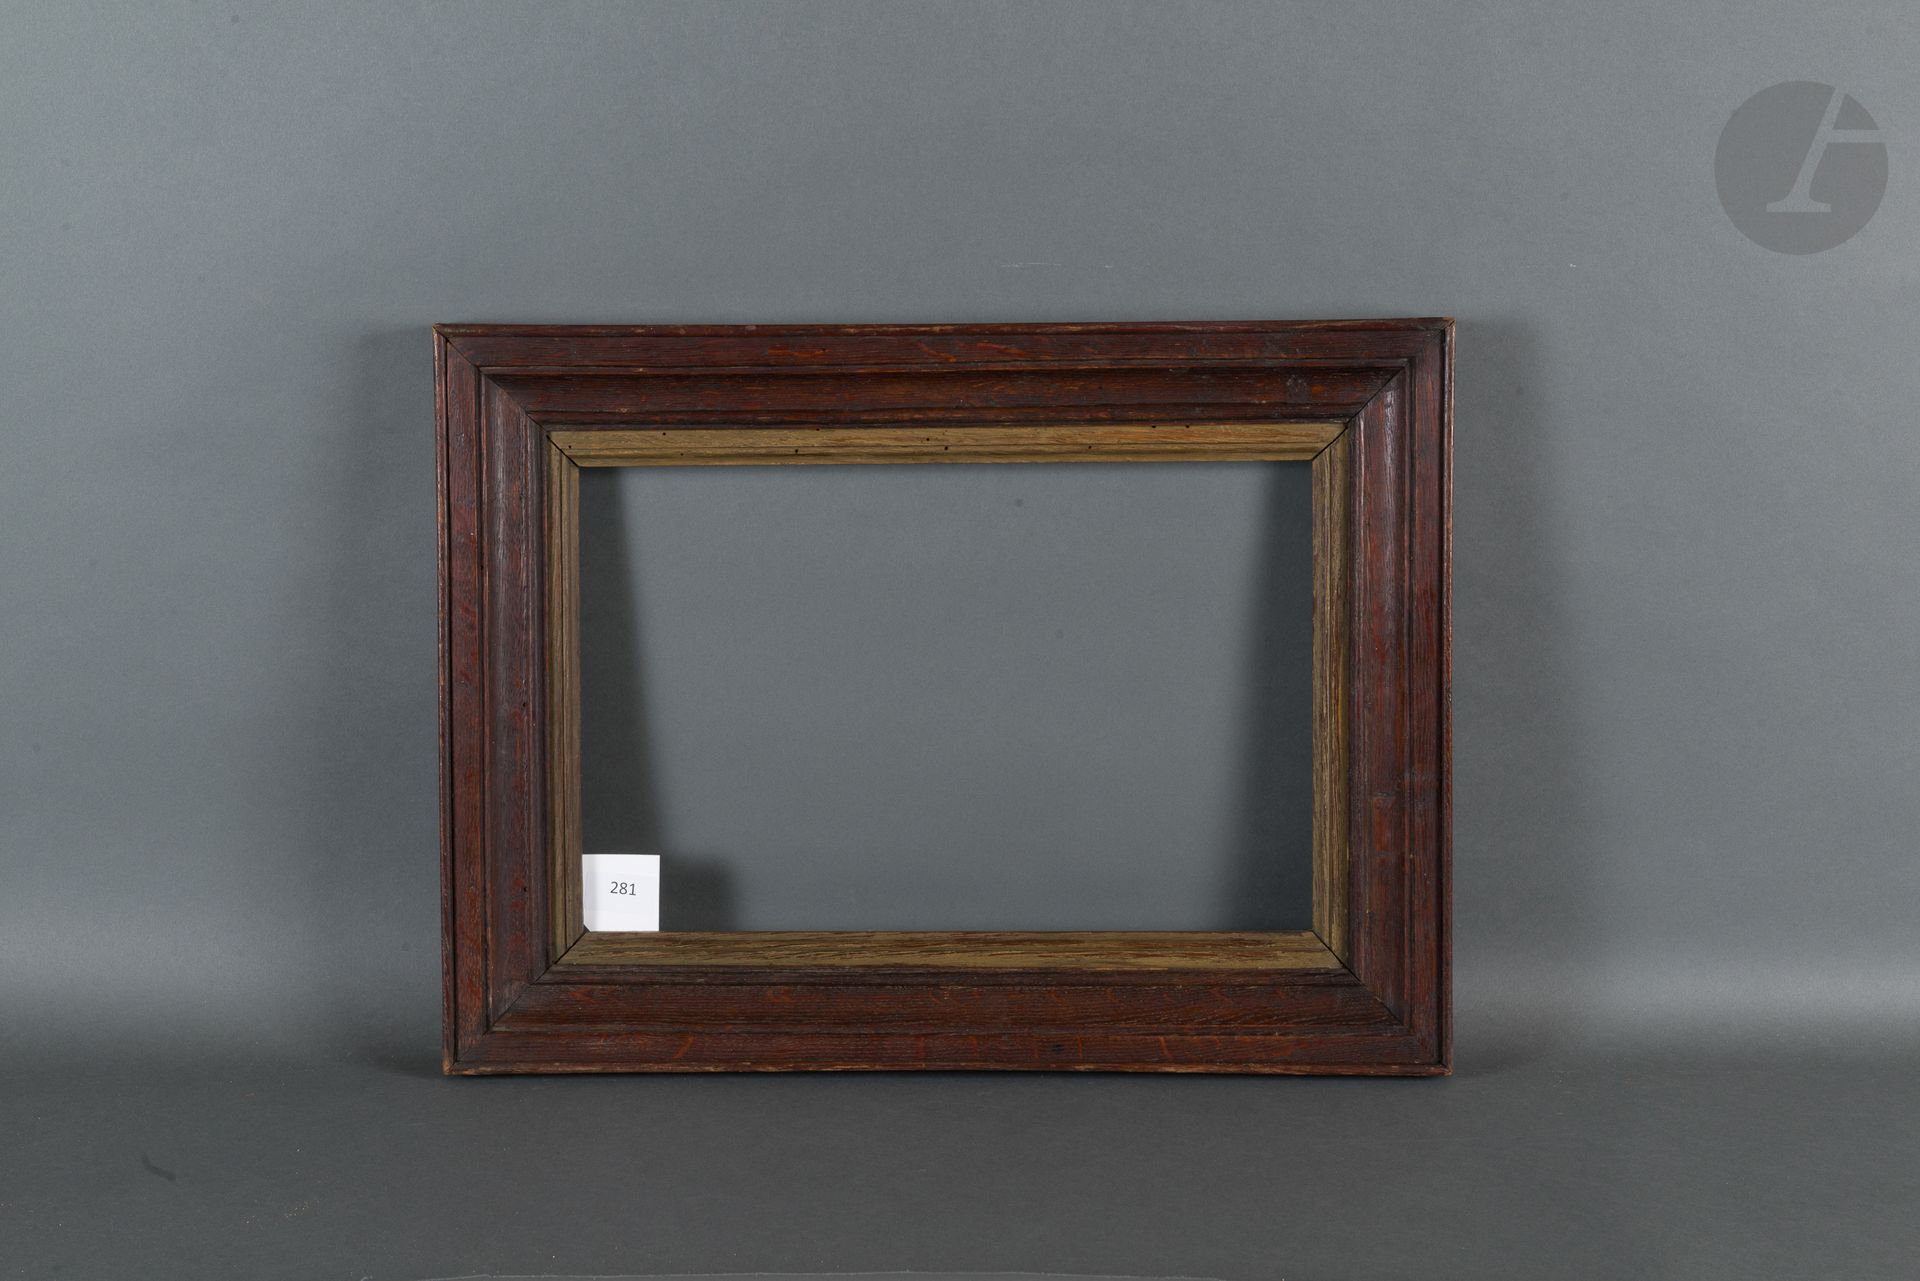 Null 模制和着色的橡木框架。
荷兰，19世纪。
25.7 x 39.6厘米--轮廓：7.8厘米（6P
）

见第36页的复制品

。